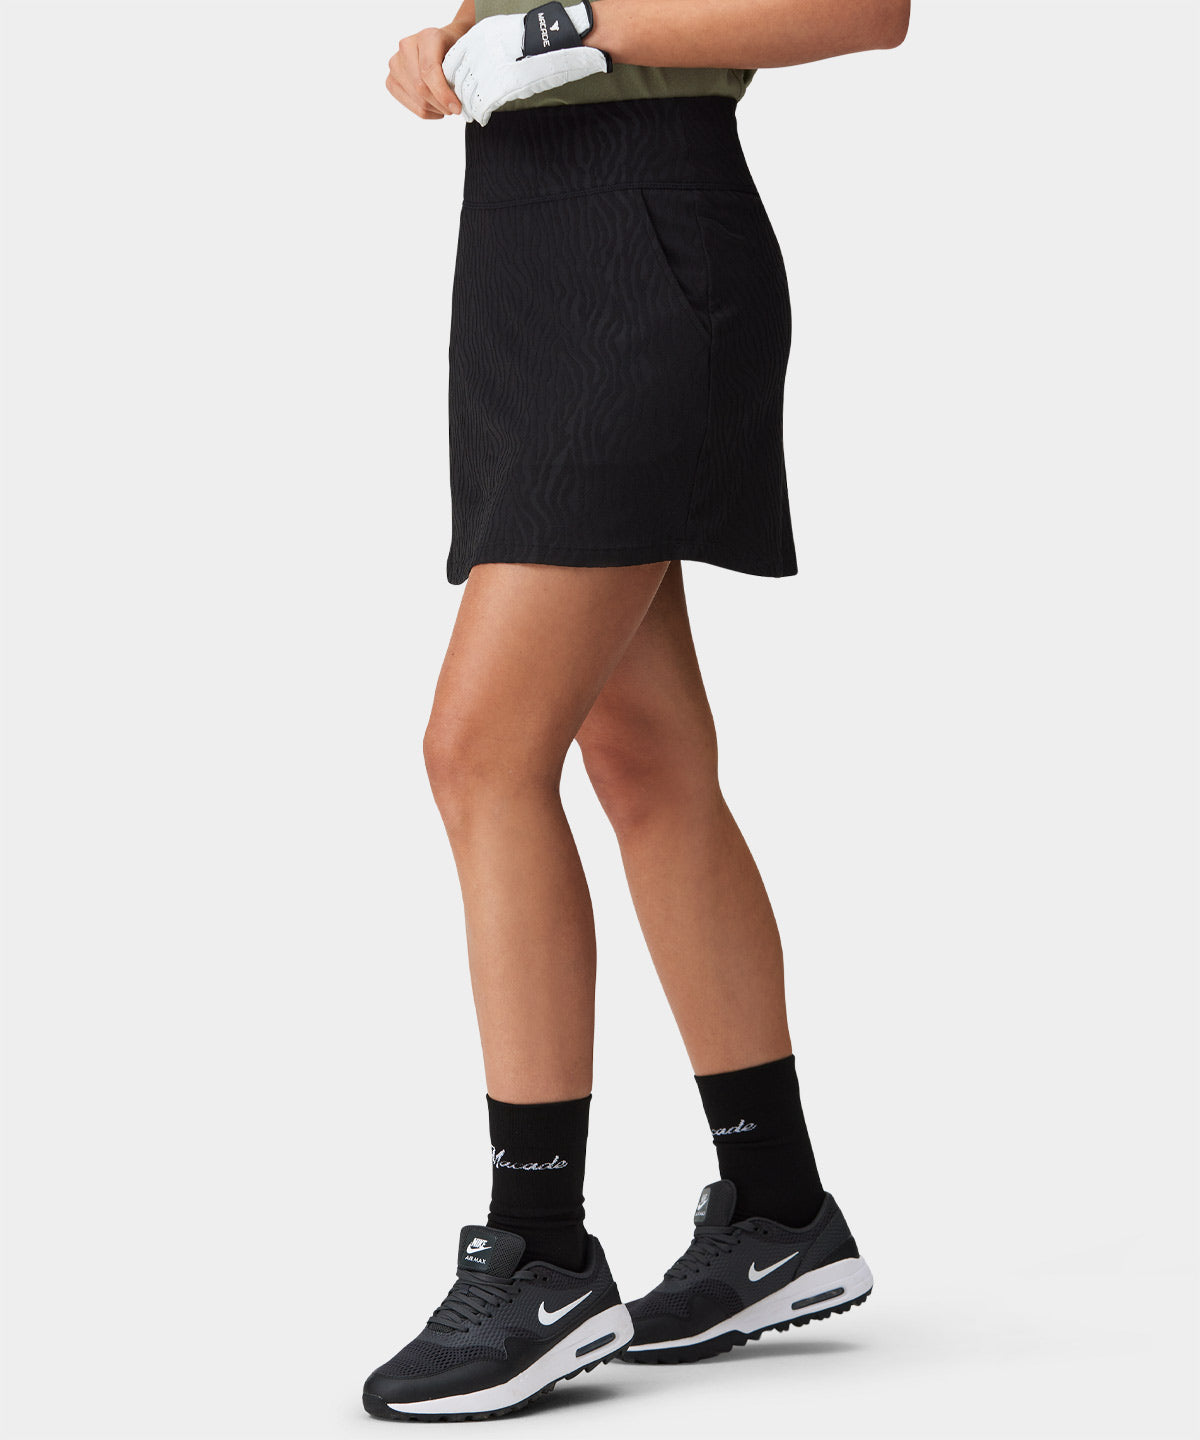 Rori Black Performance Skirt Macade Golf